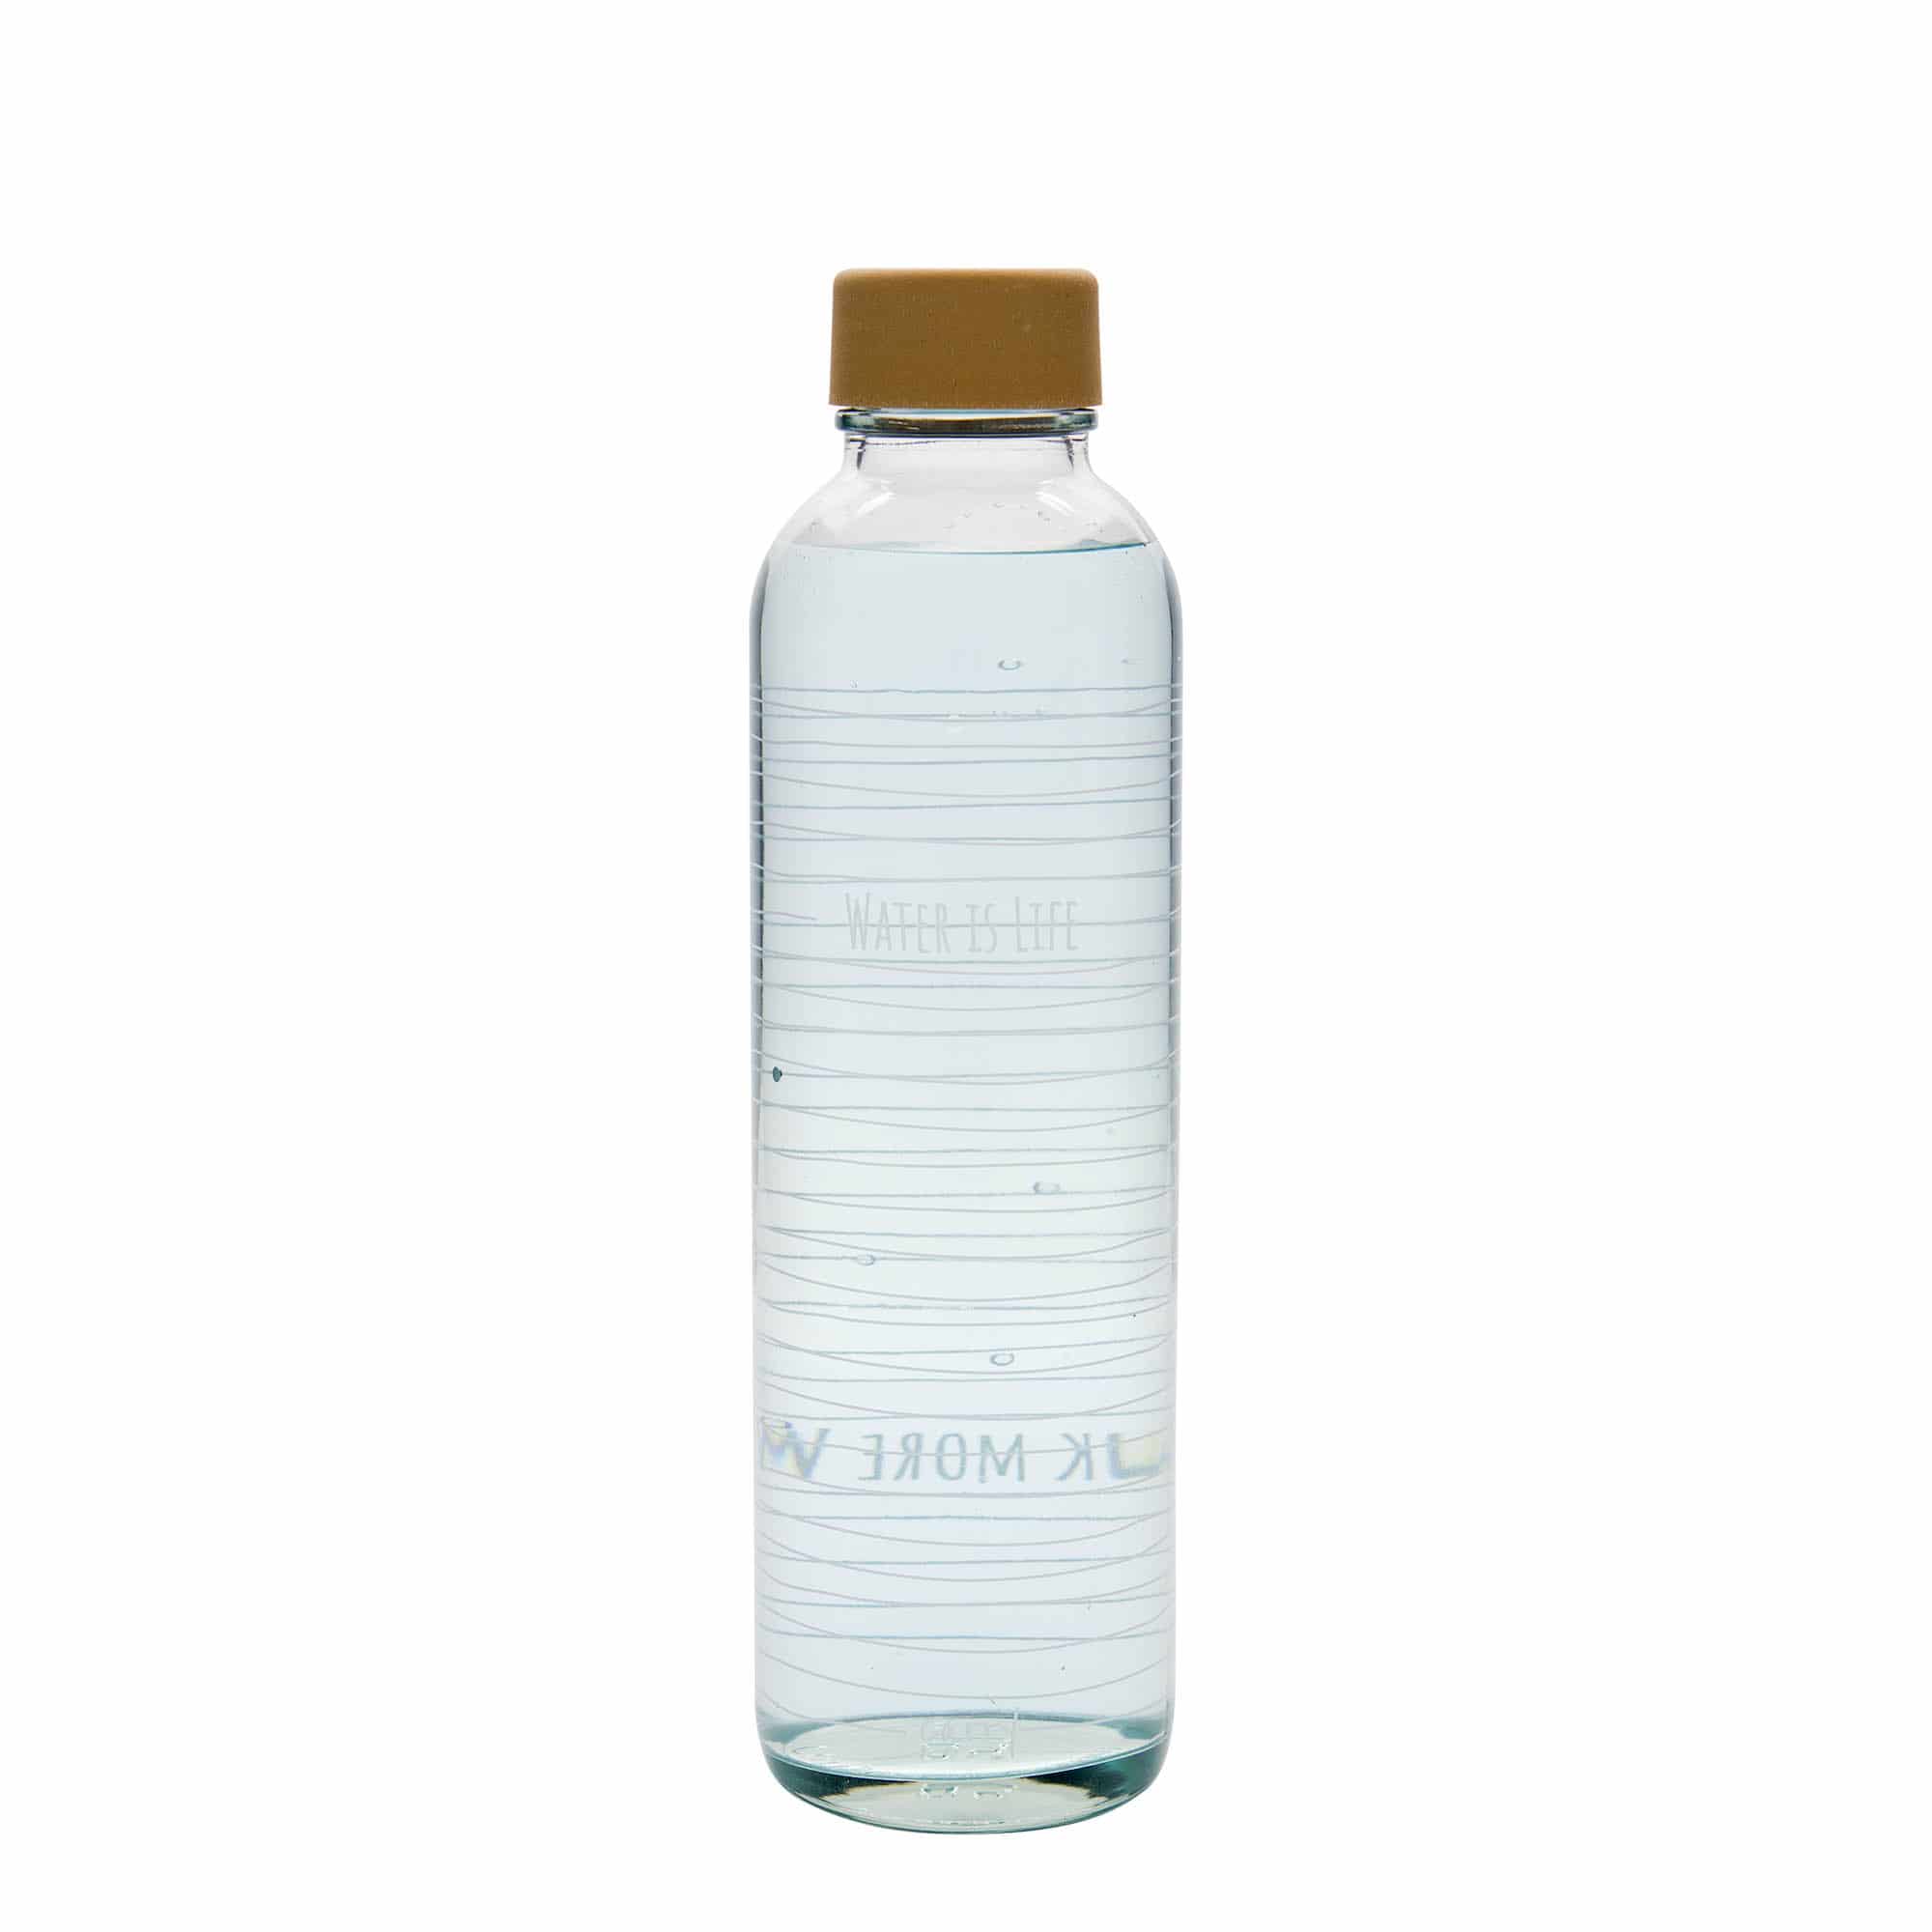 700 ml water bottle ‘CARRY Bottle’, print: Water is Life, closure: screw cap